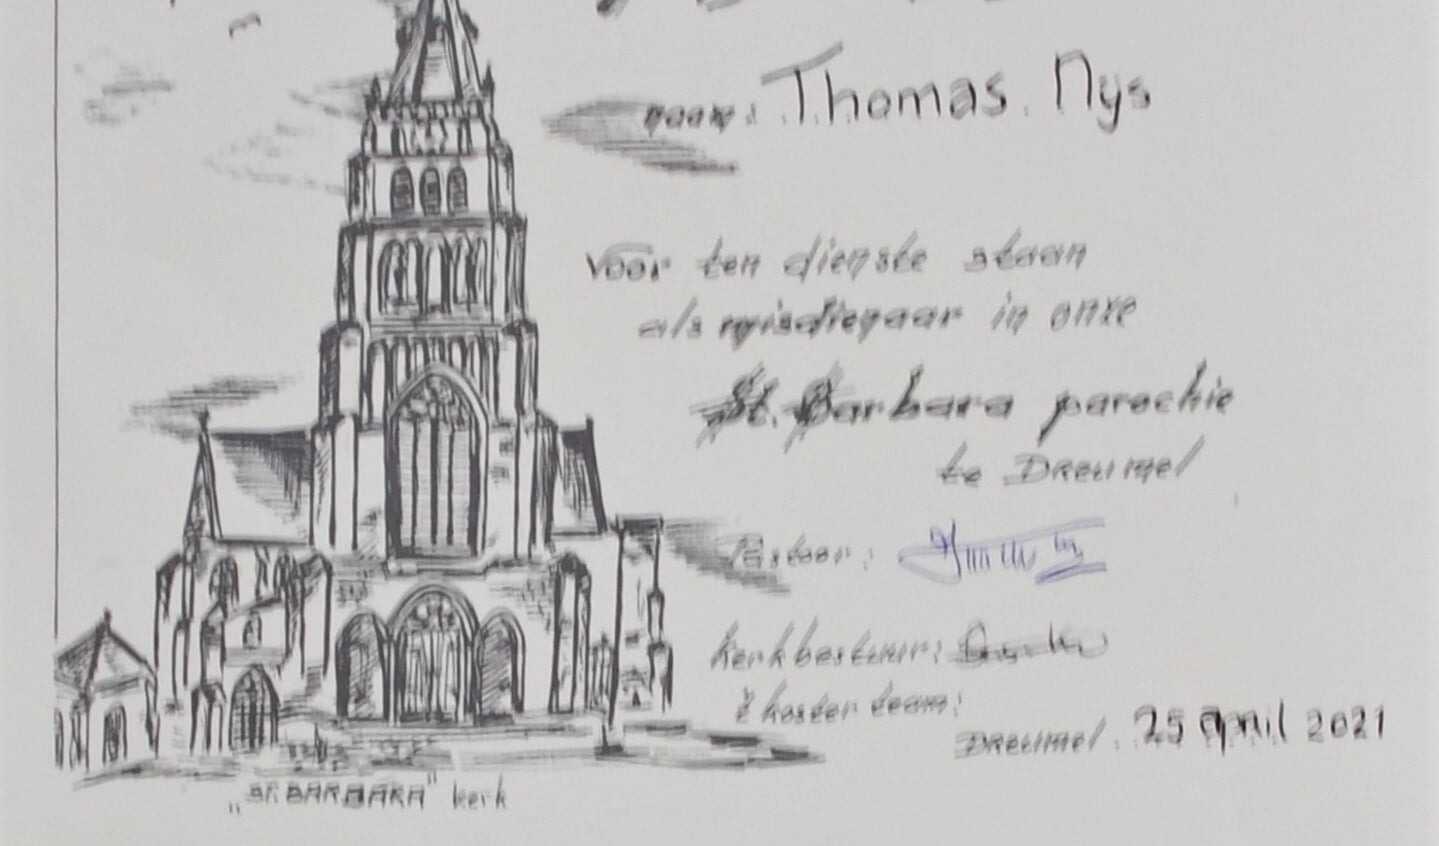 Afscheid misdienaar Thomas Nijs St Barbarakerk in Dreumel